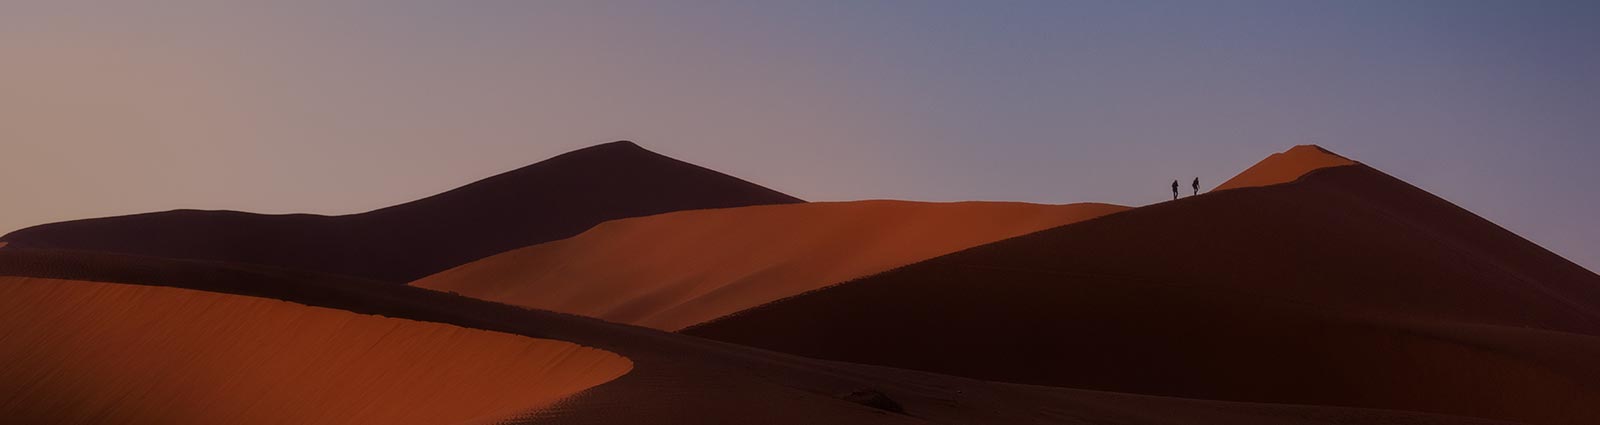 The Sand Dunes of Namib Desert, Namib-Naukluft National Park, Namibia